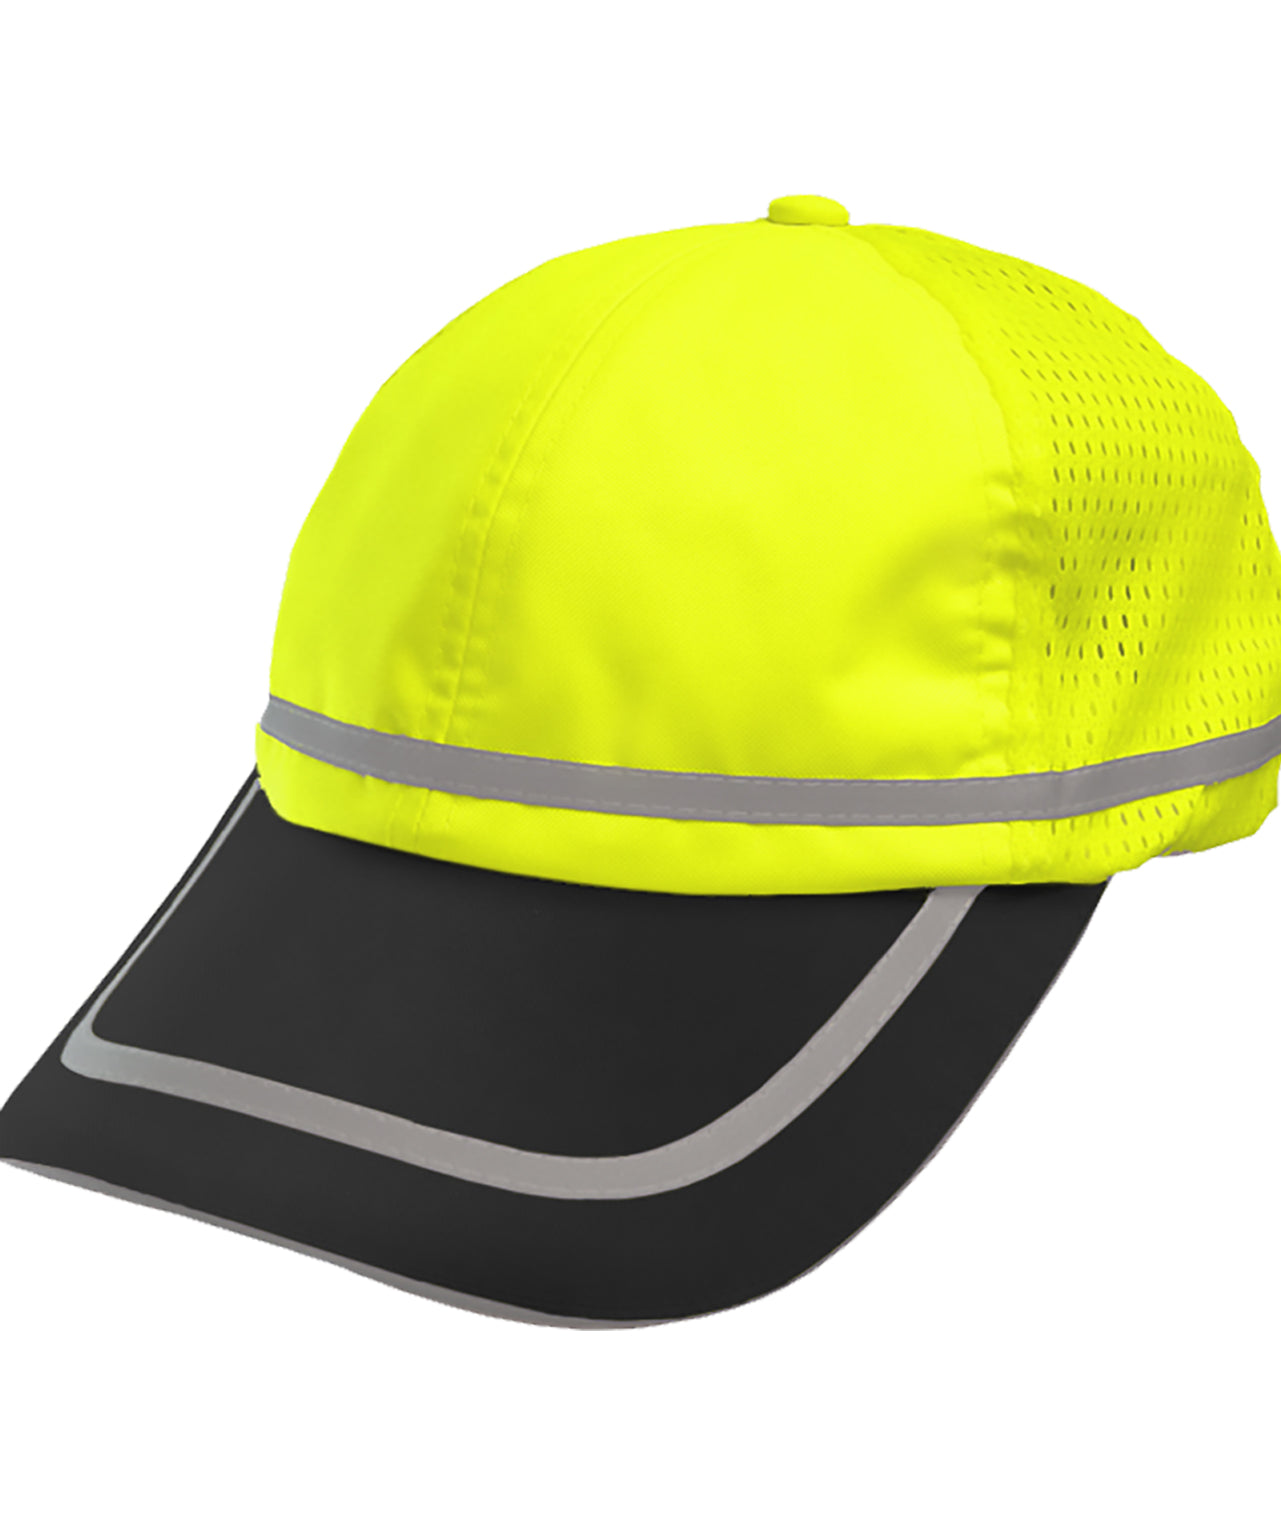 803STLB Safety Baseball Hat: Hi-Vis Two-Tone Cap: Adjustable Cotton Sweatband